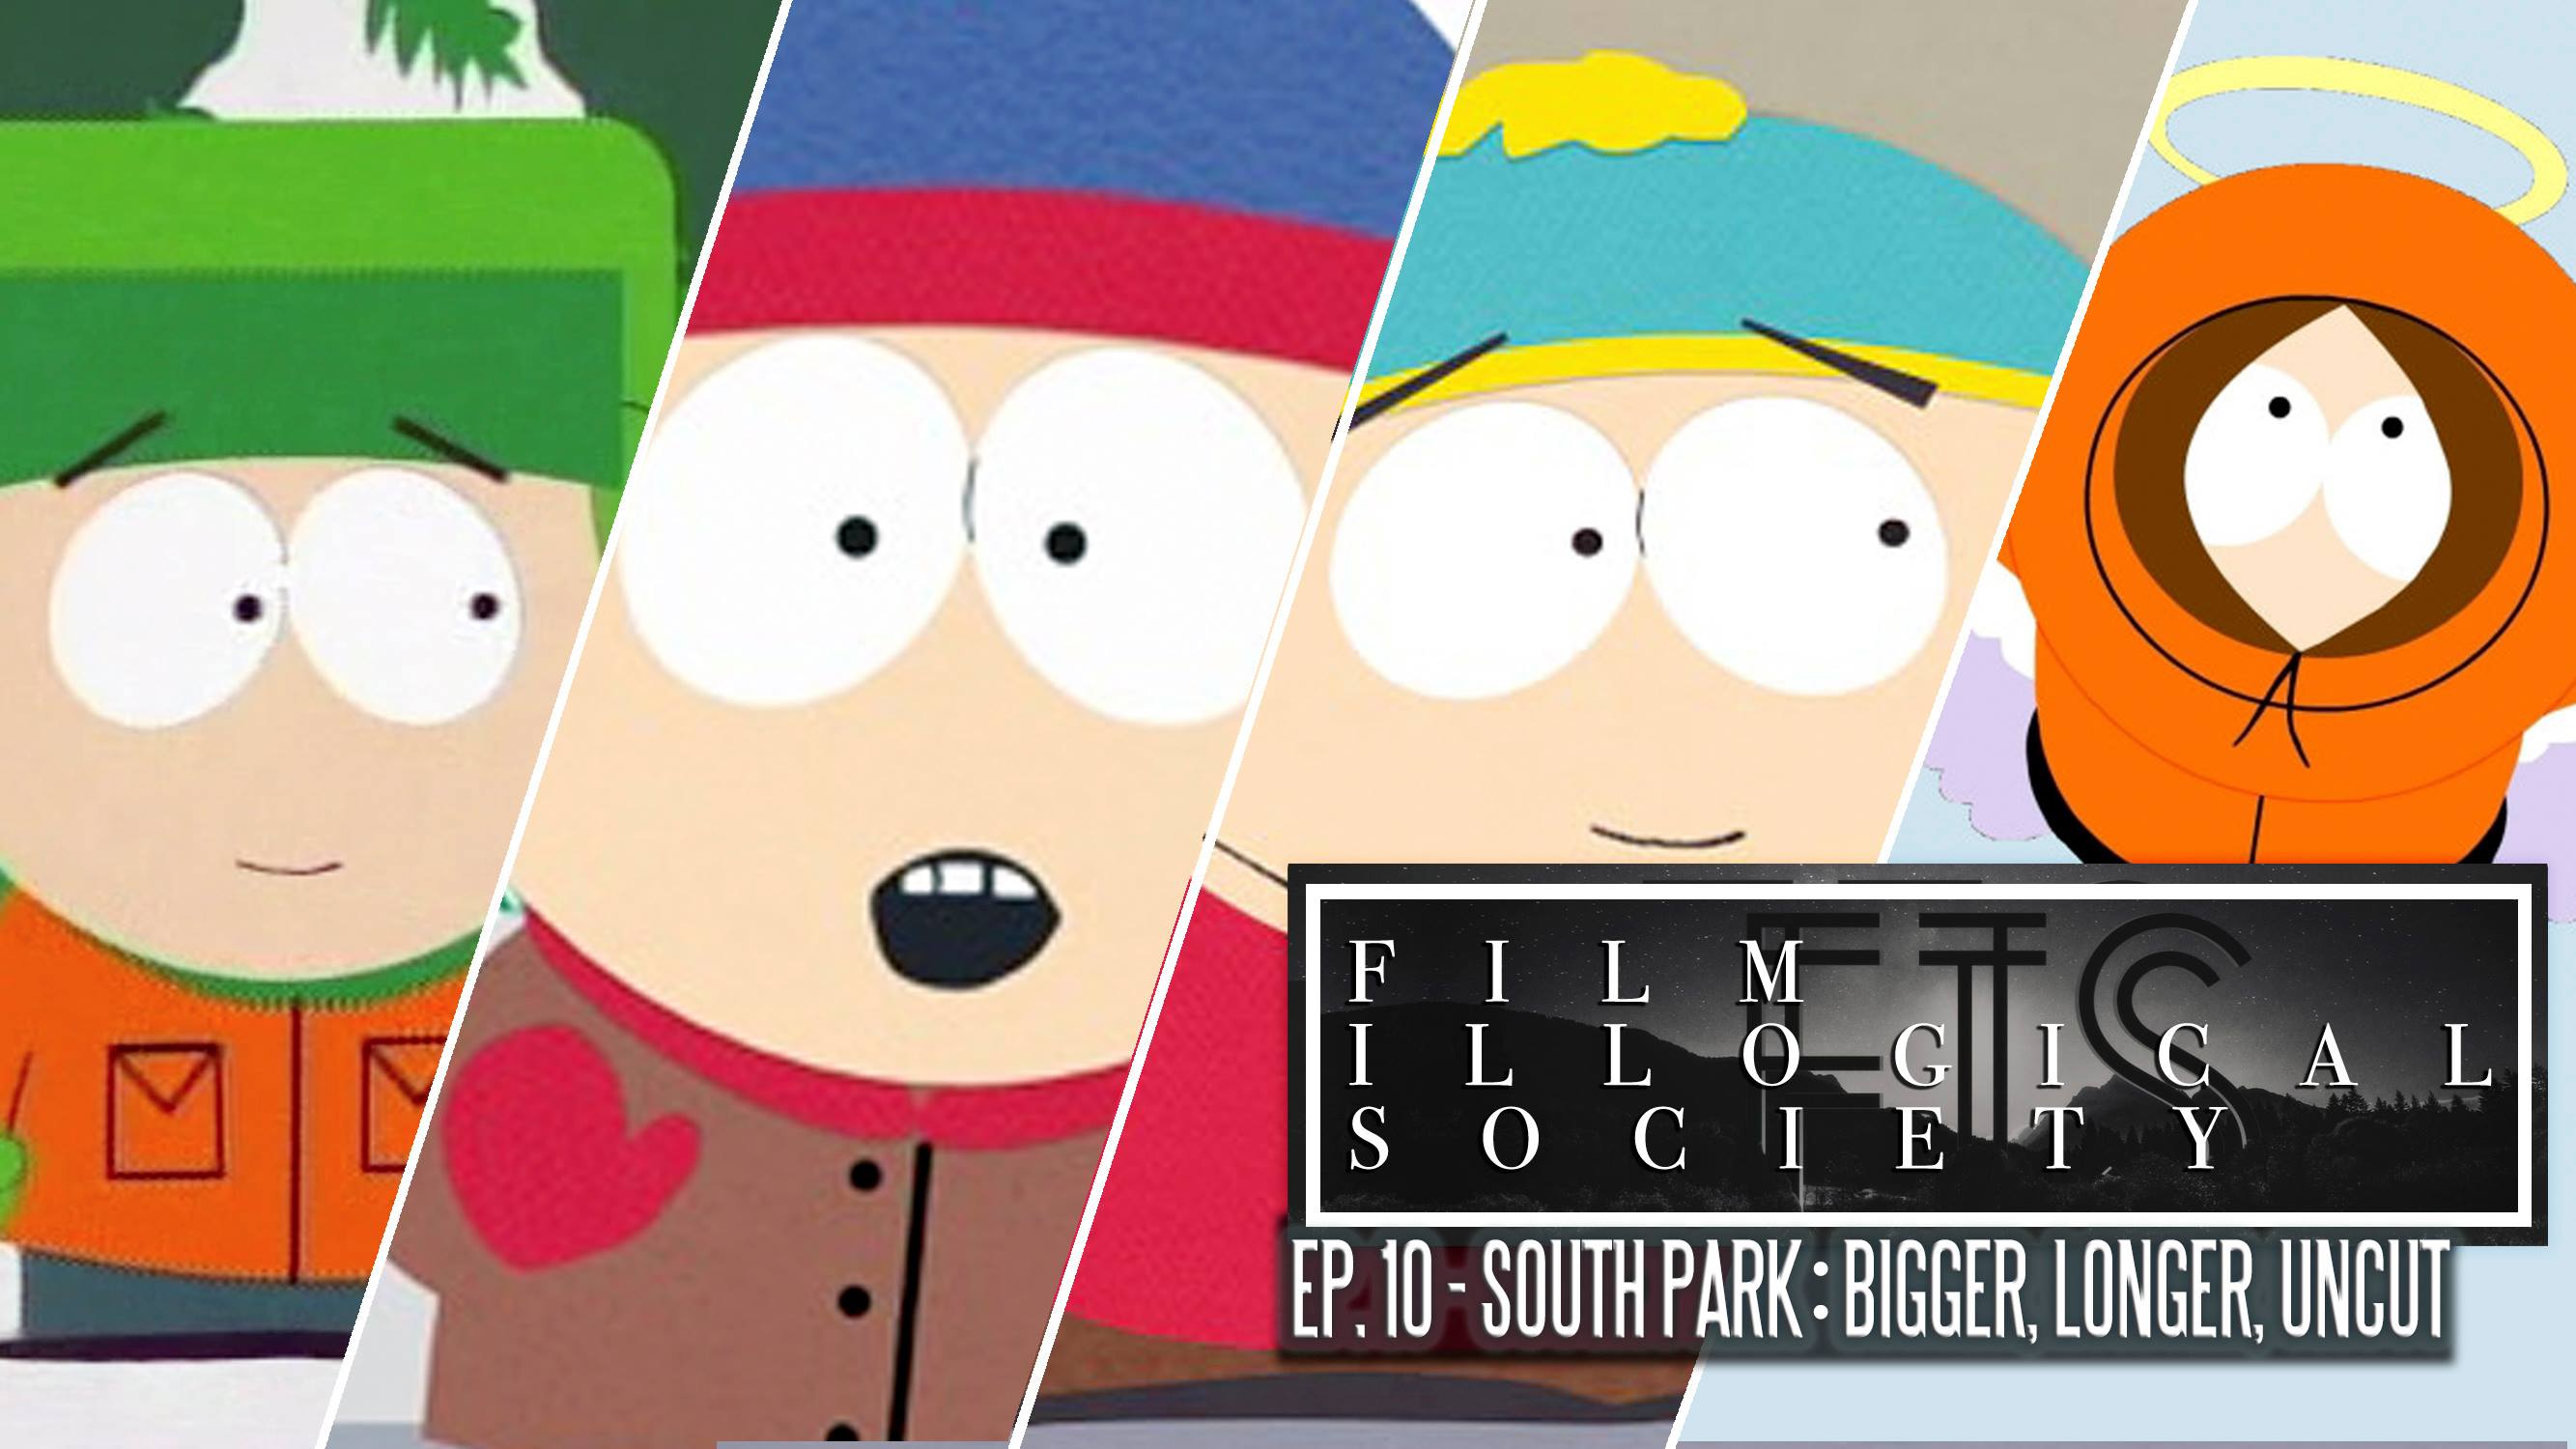 10 – South Park: Bigger, Longer and Uncut